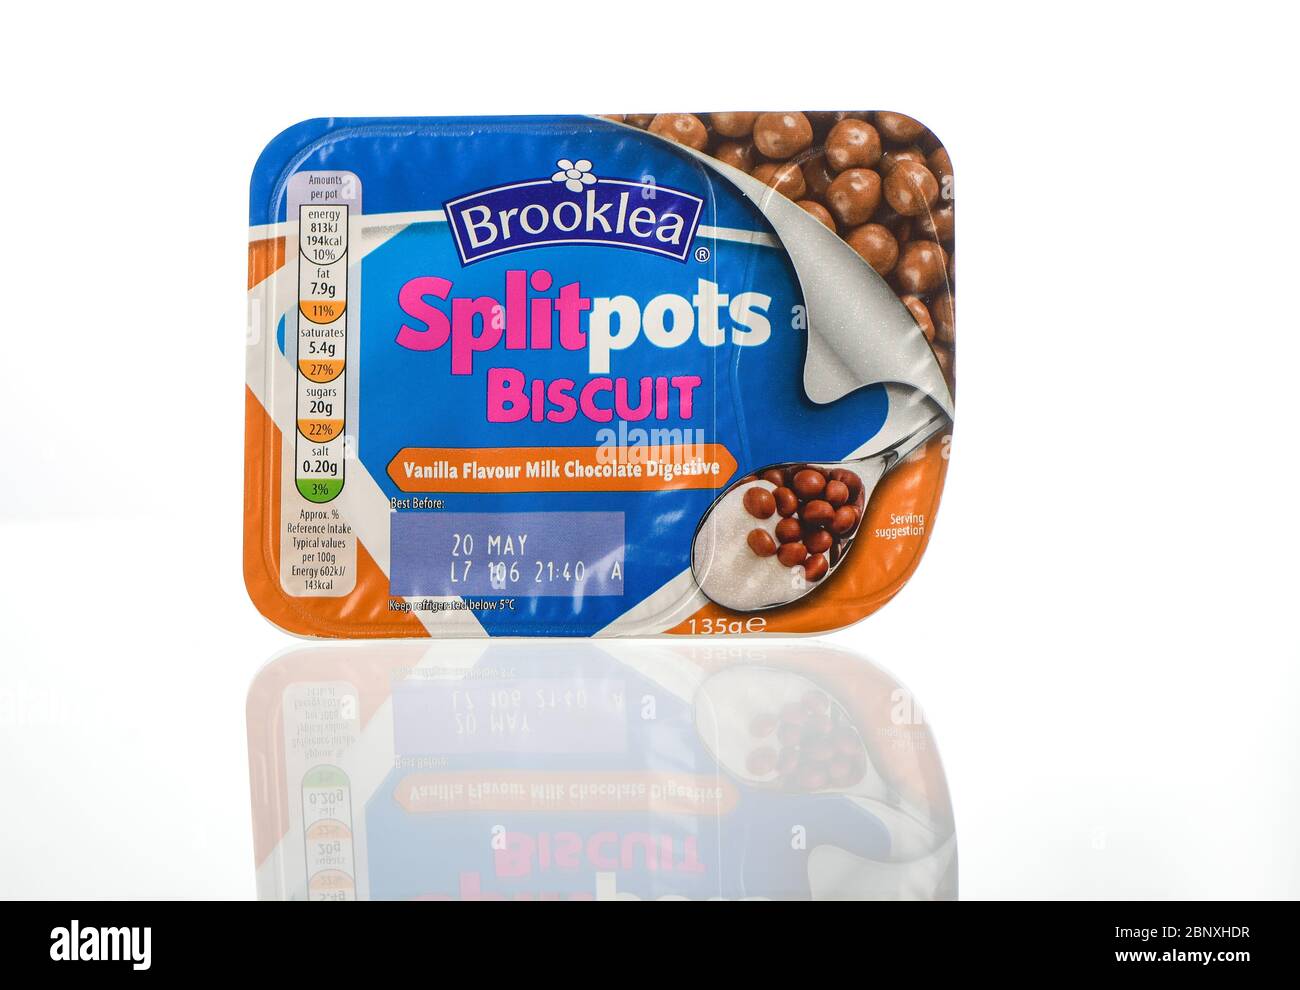 https://c8.alamy.com/comp/2BNXHDR/brooklea-splitpots-biscuit-yogurt-vanilla-flavour-and-digestive-biscuit-isolated-on-white-background-2BNXHDR.jpg